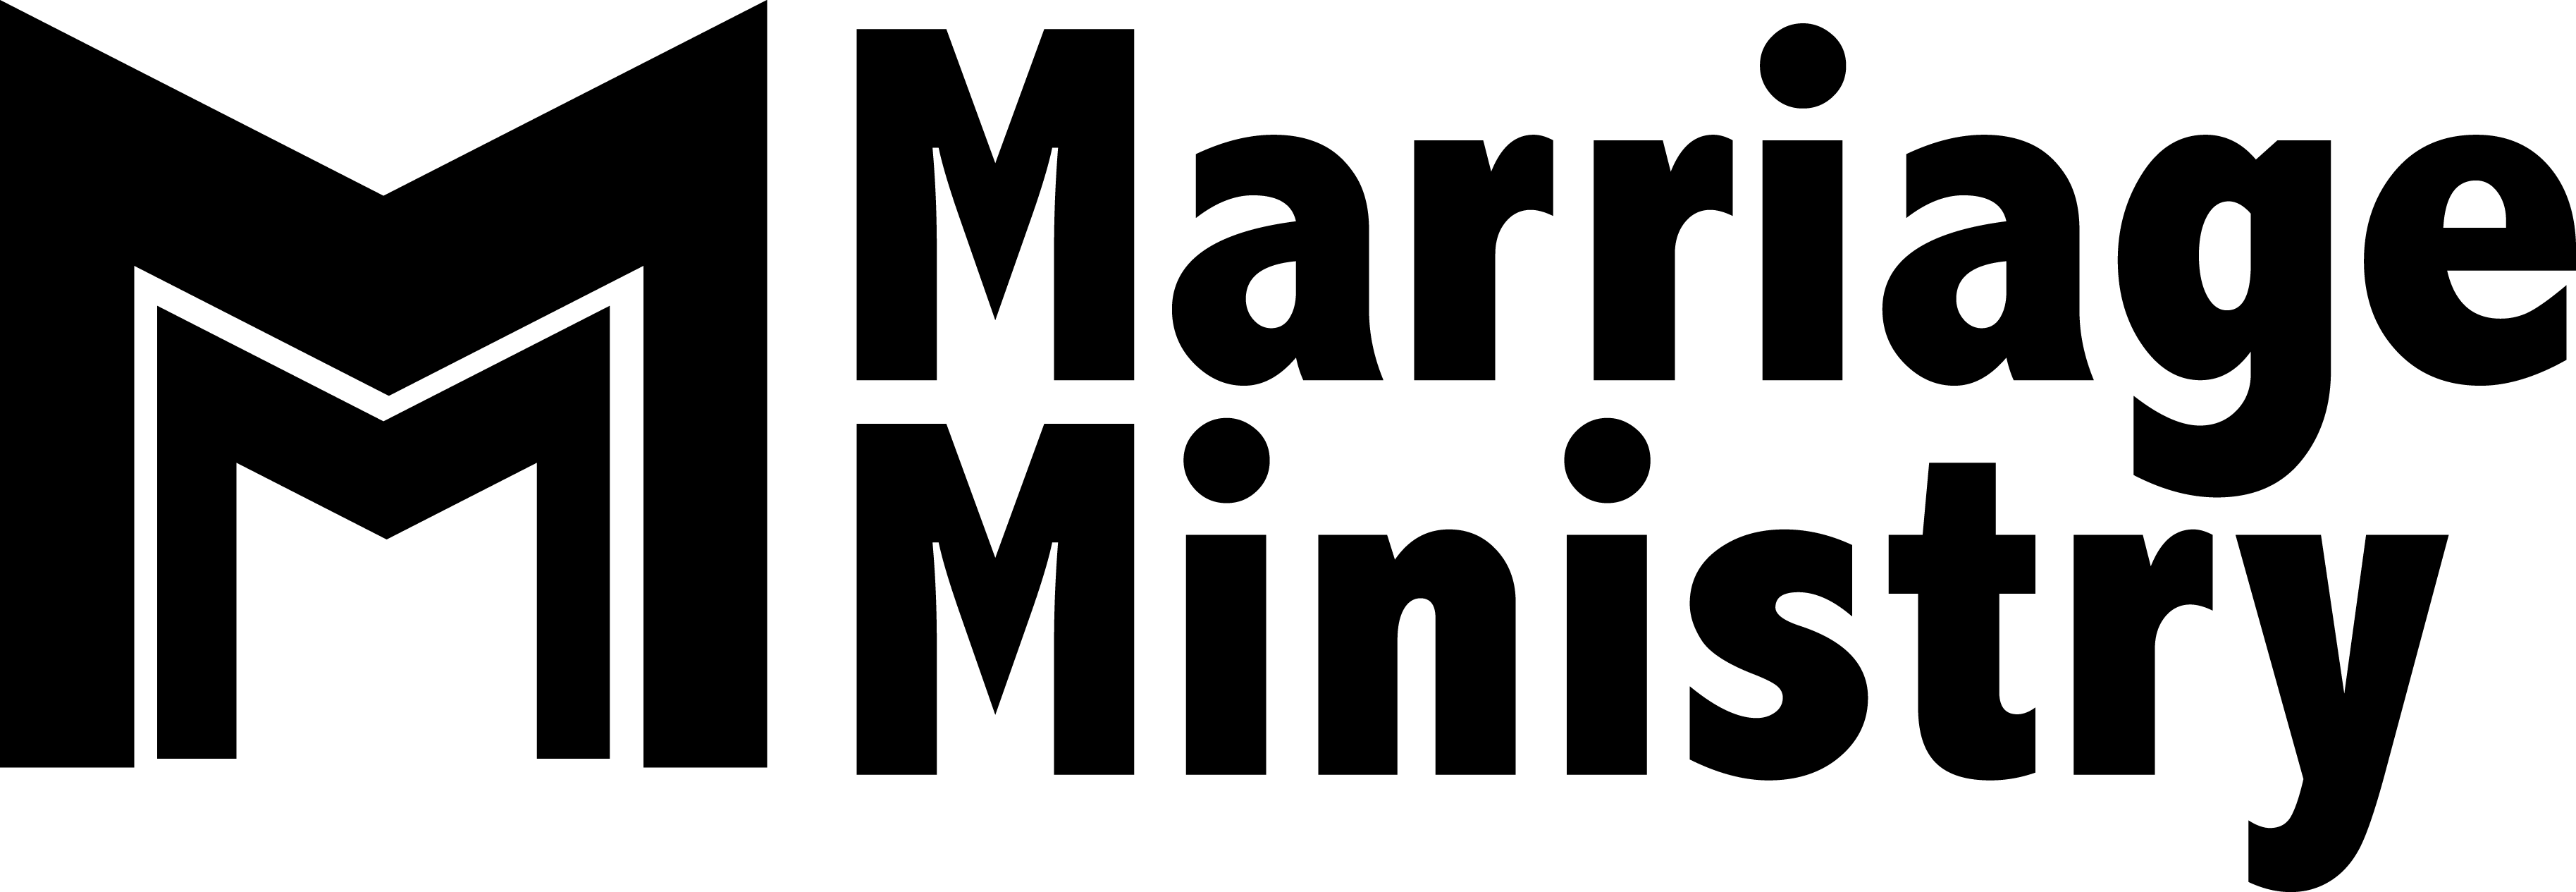 November Logo - Marriage Ministry logo idea, November 2009 | My Graphic Design ...